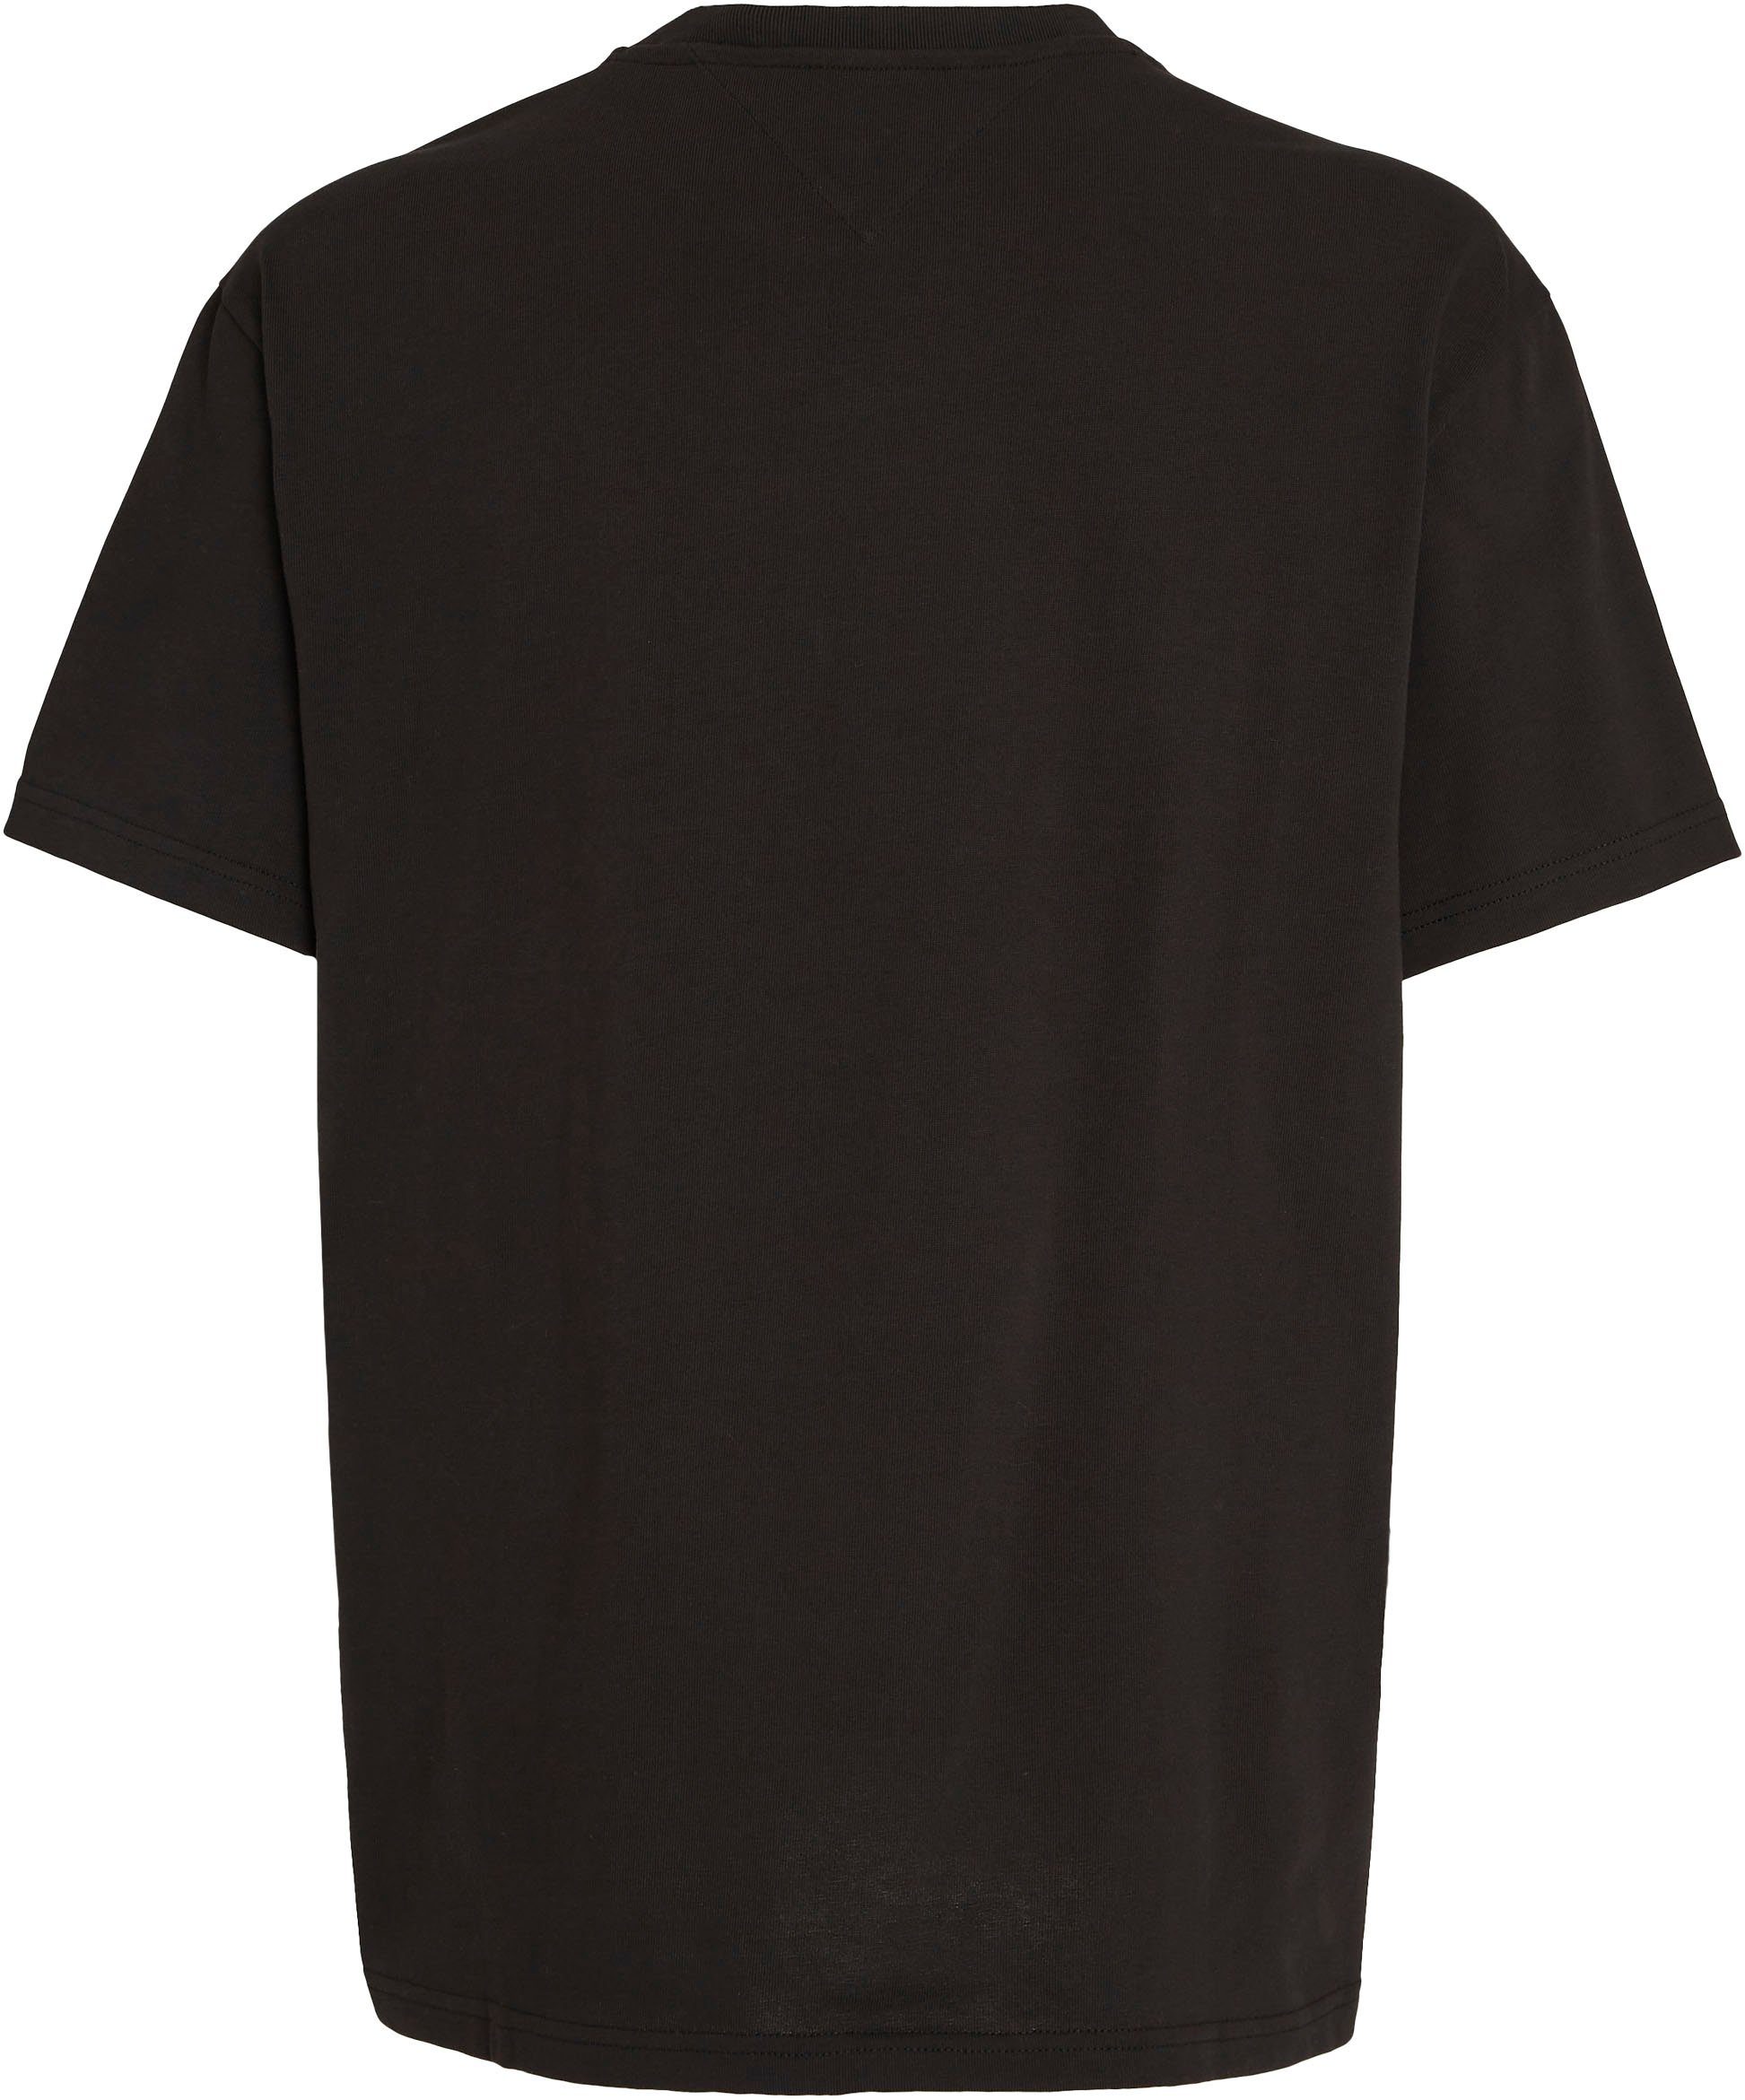 Tommy Jeans T-Shirt TJM REG TEE Black CLASSICS EXT NEW Rundhalsausschnitt S mit